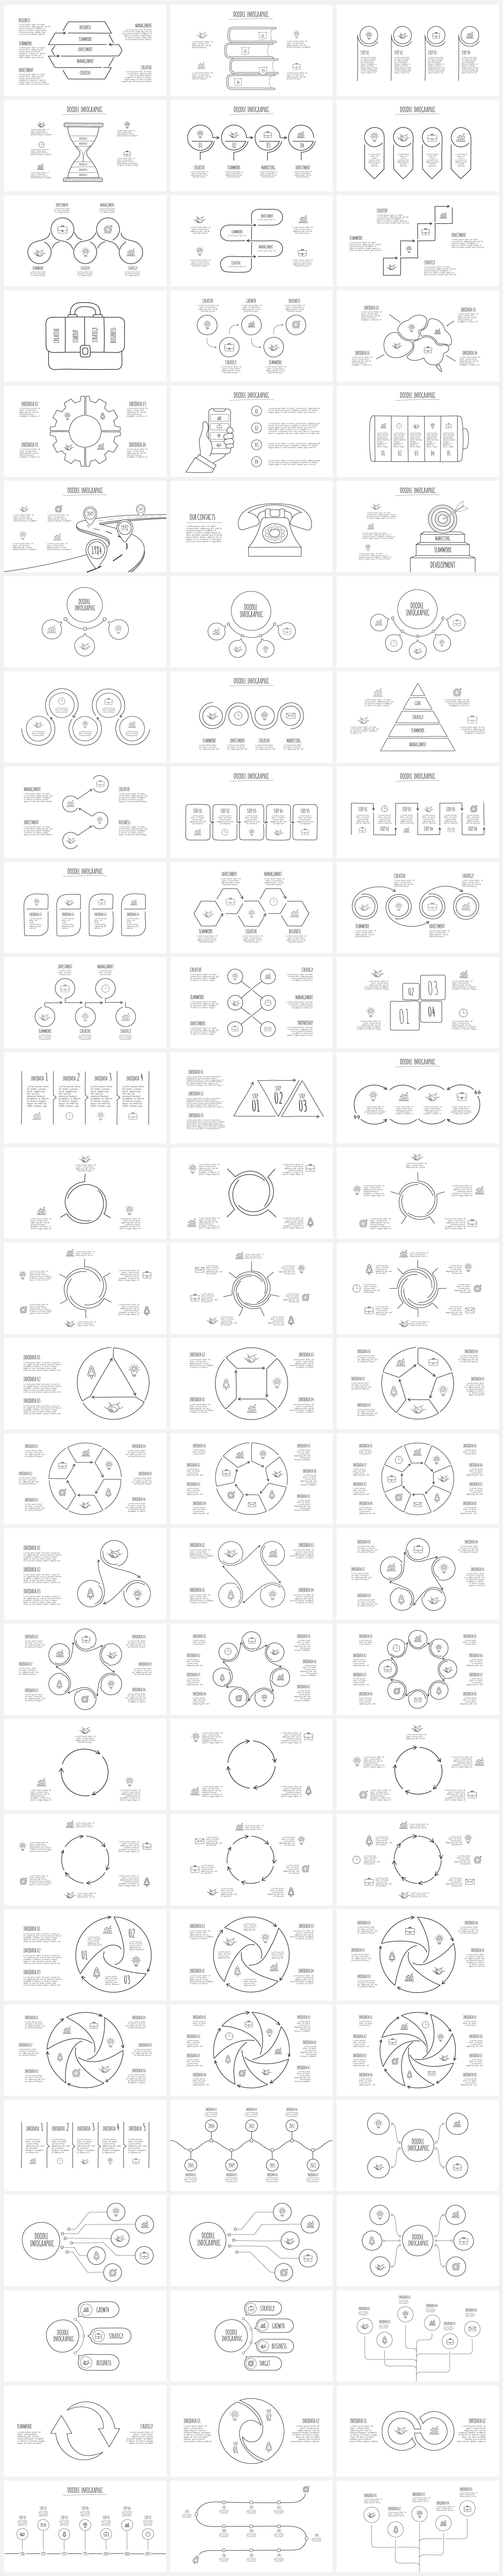 Multipurpose Infographics PowerPoint Templates v.5.4 - 184